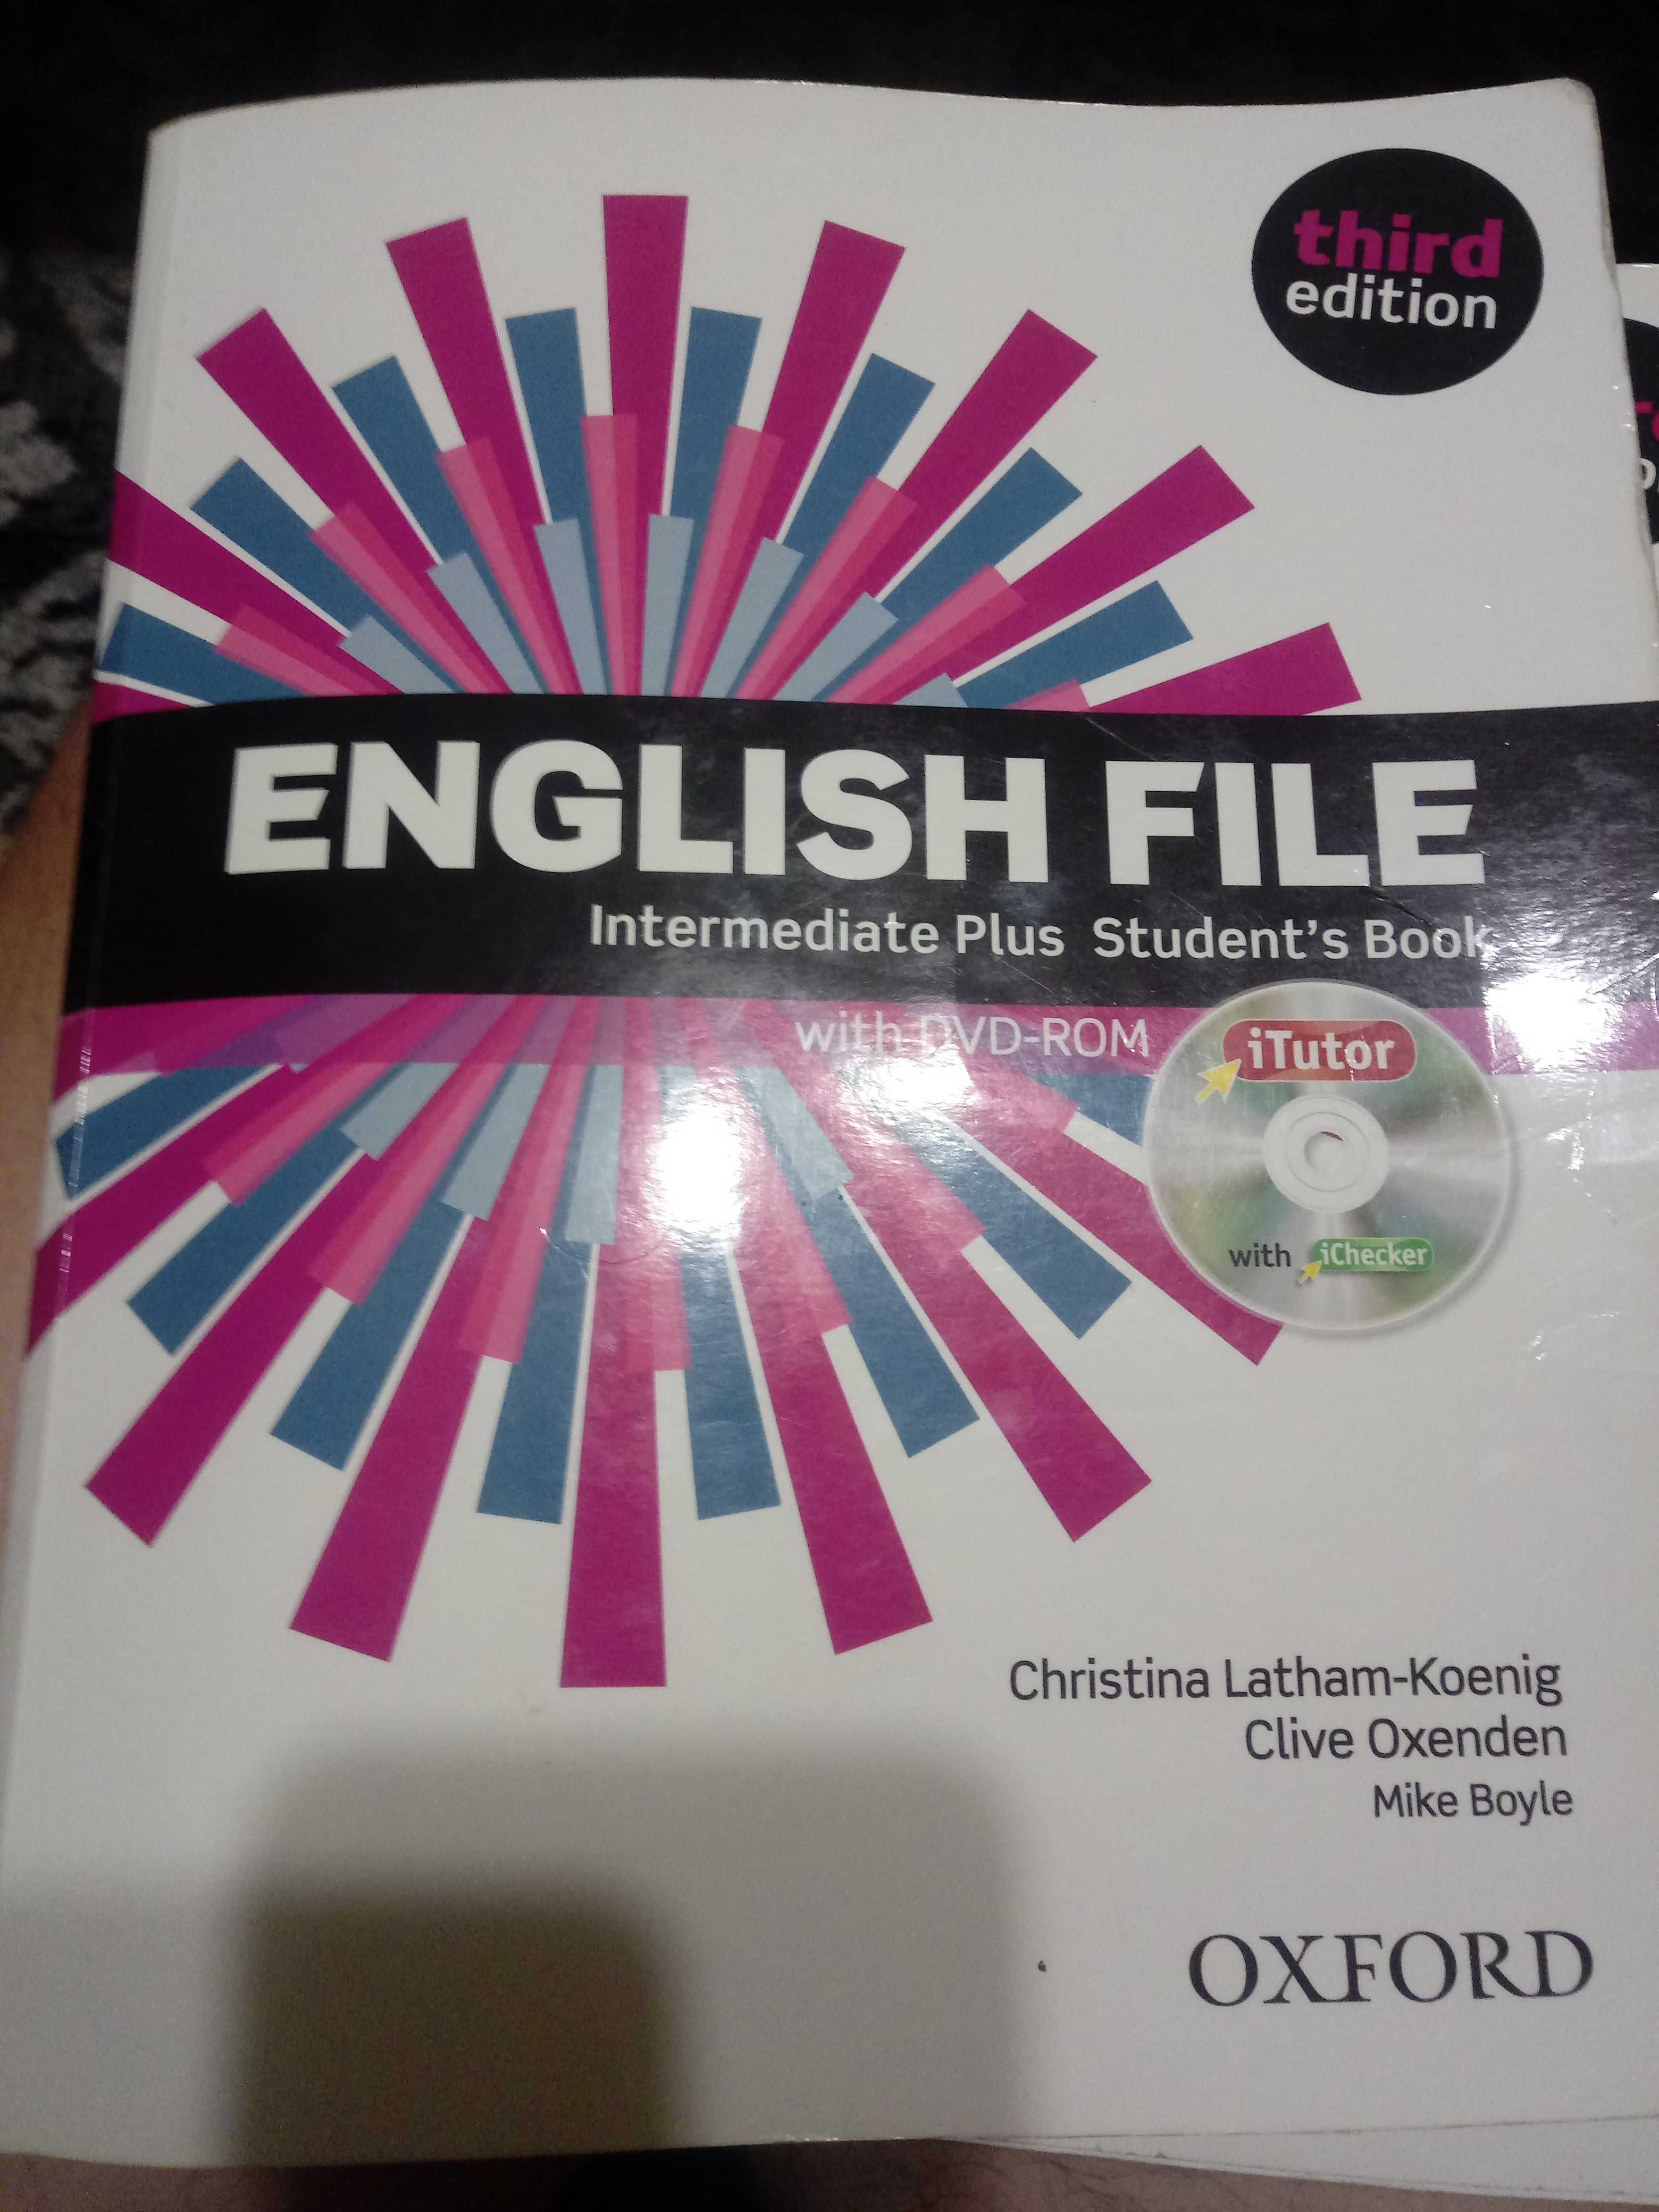 English intermediate plus workbook